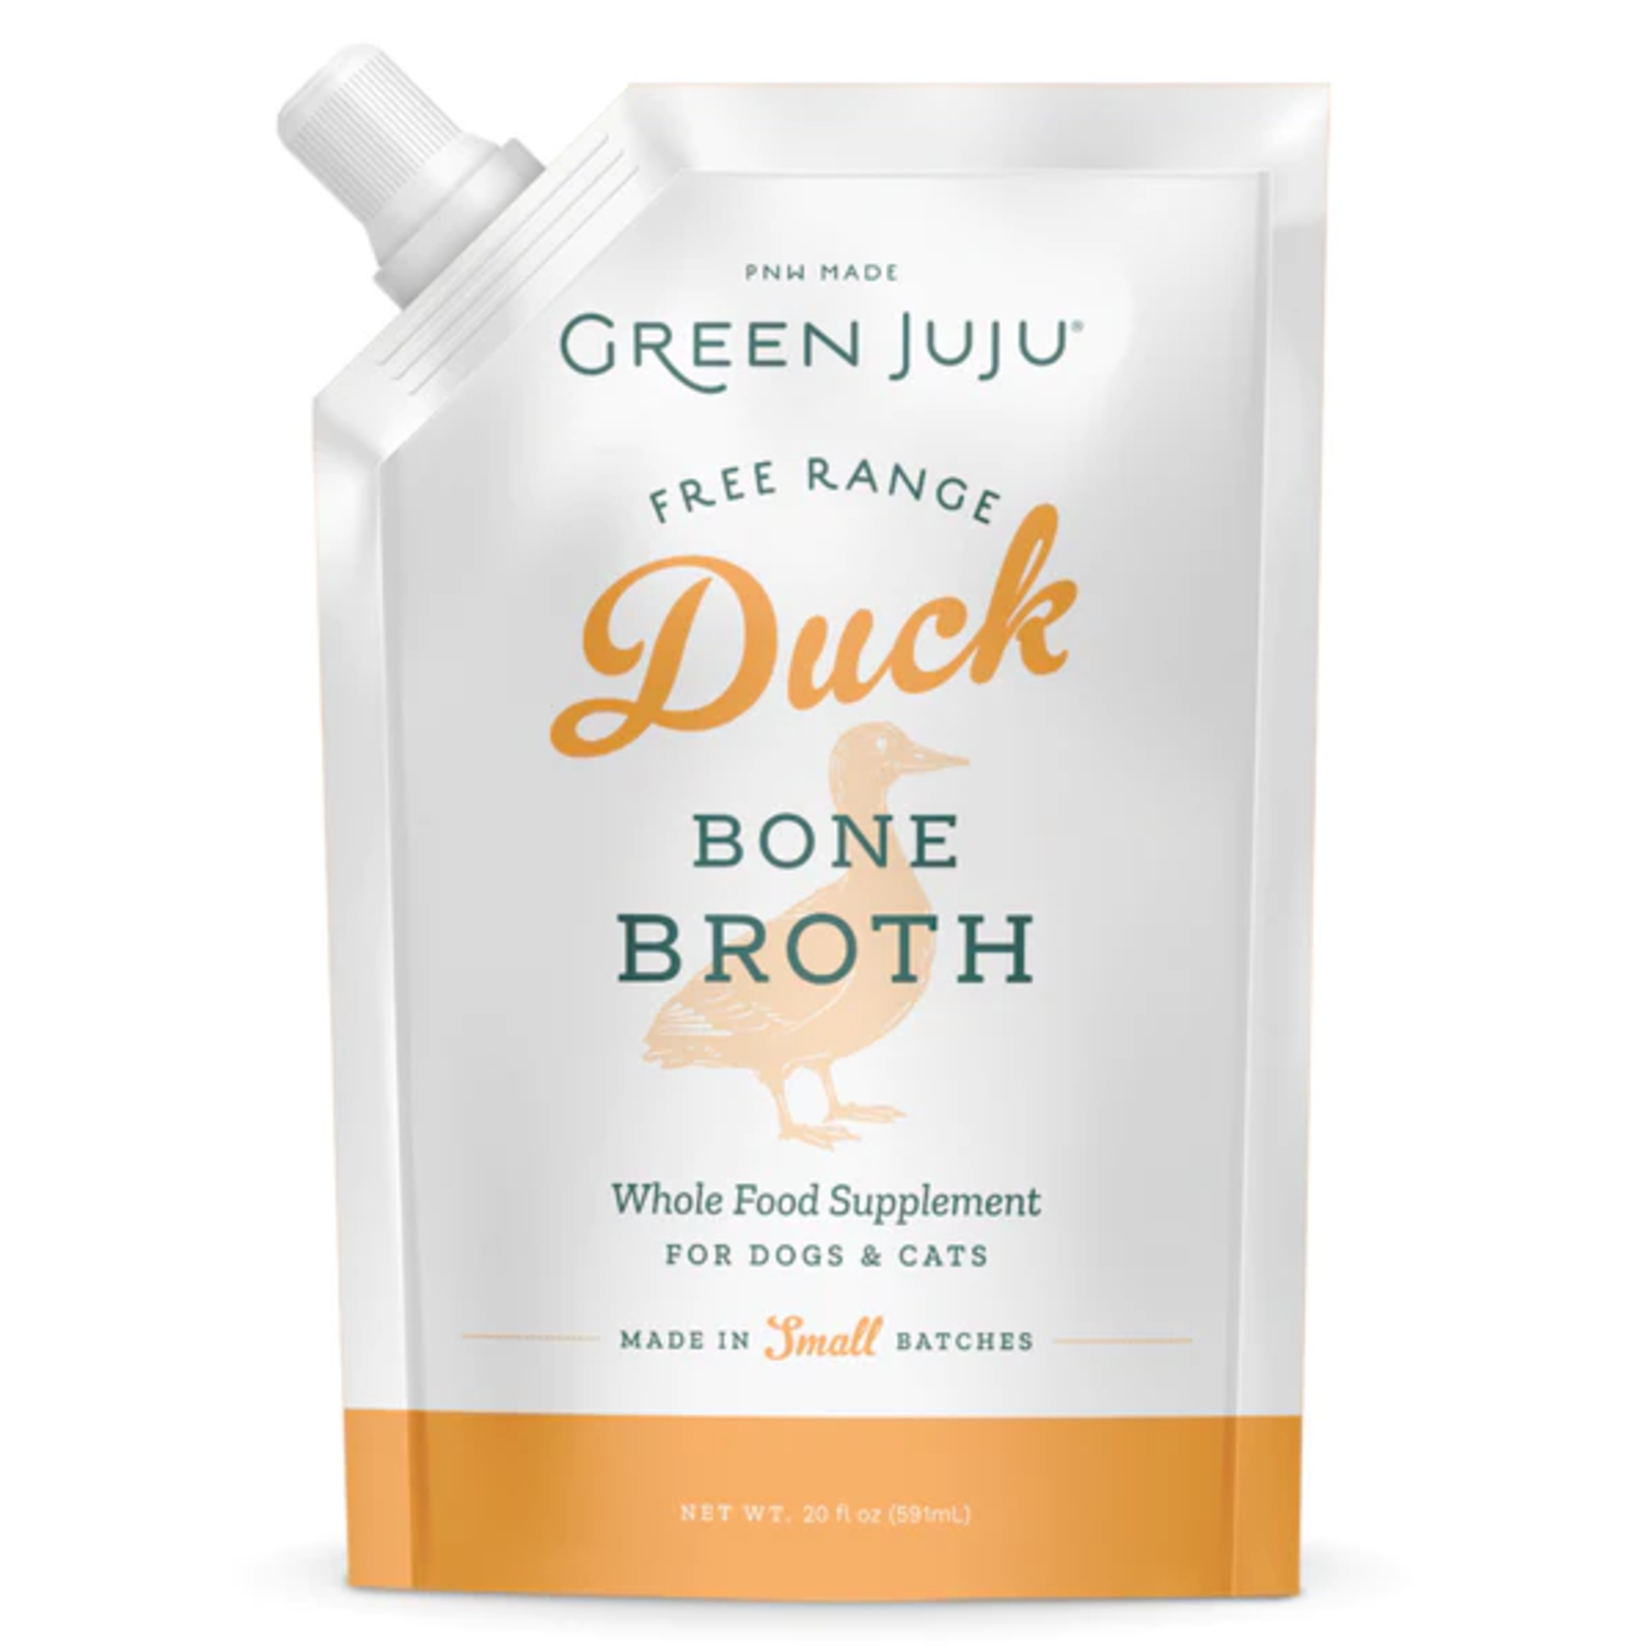 Green Juju Green Juju Free Range Duck Bone Broth